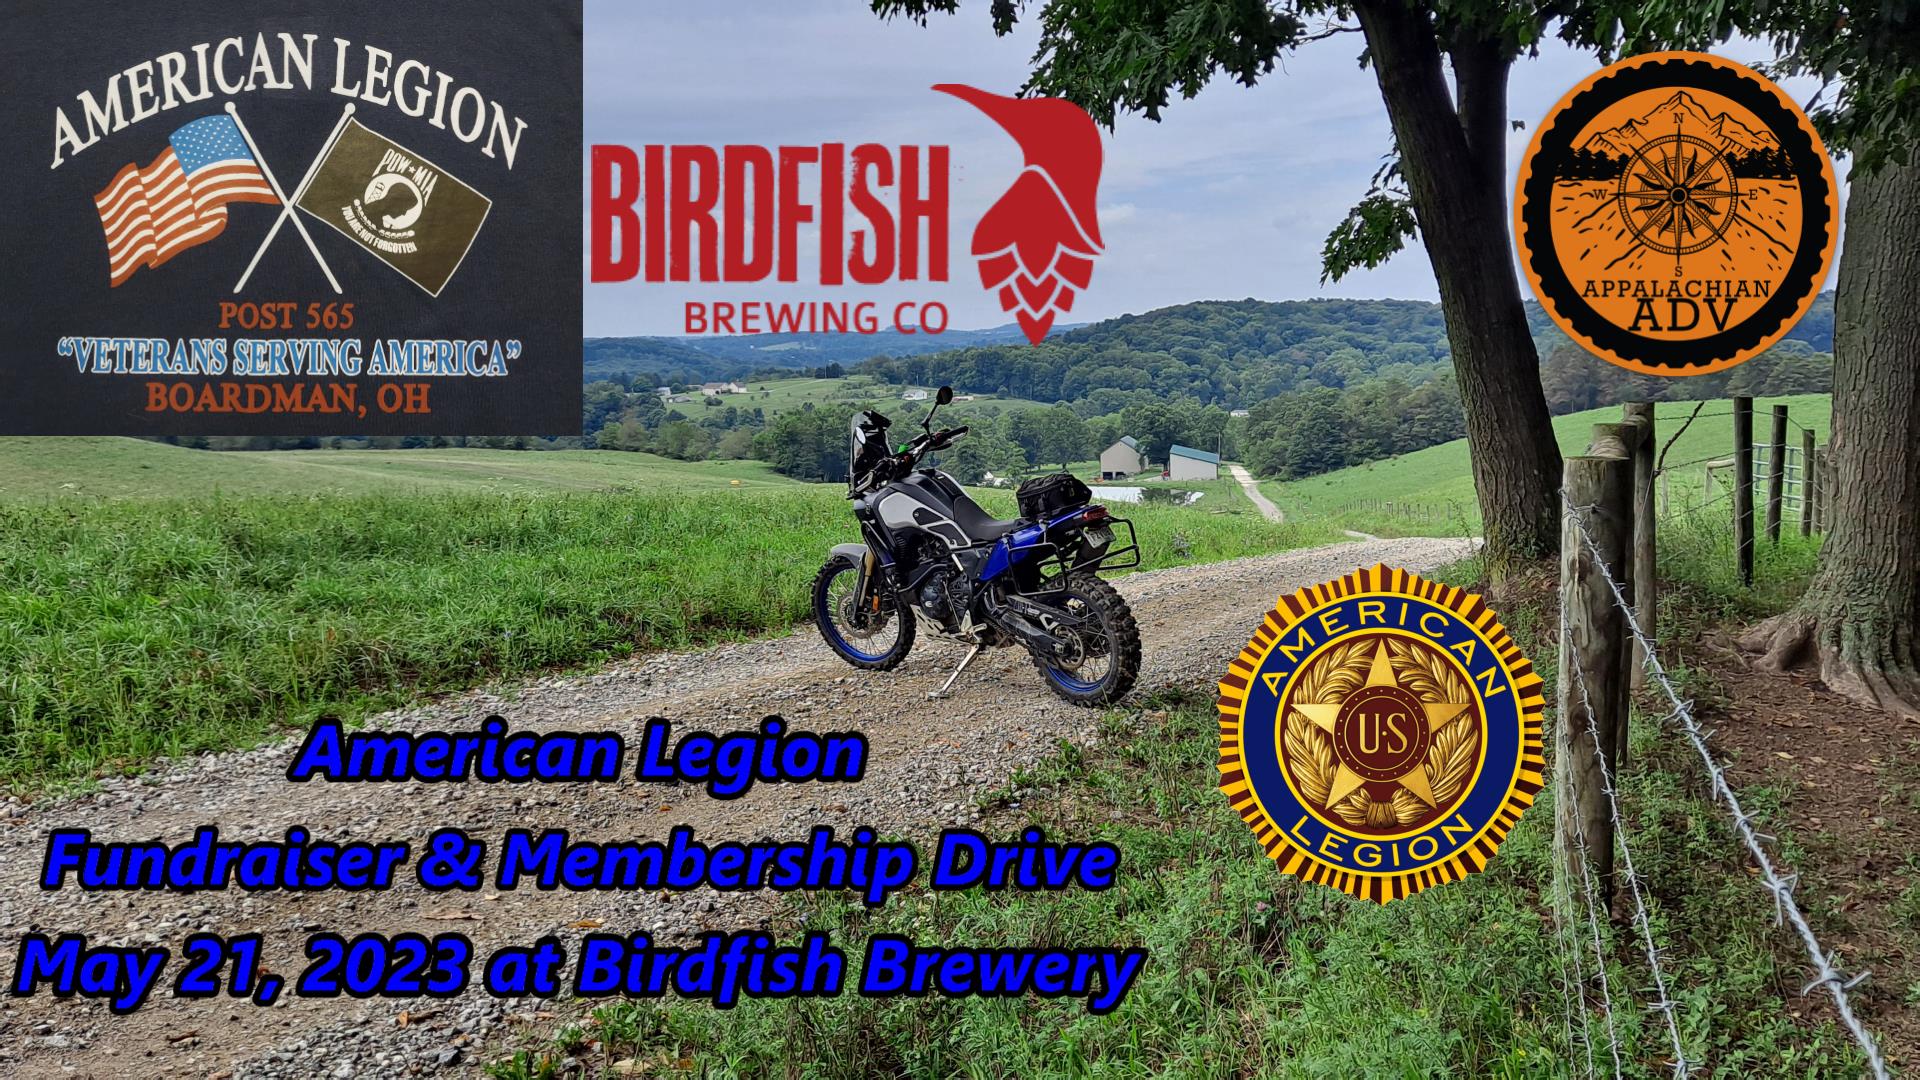 American Legion Fundraiser & Membership Drive Group Rides